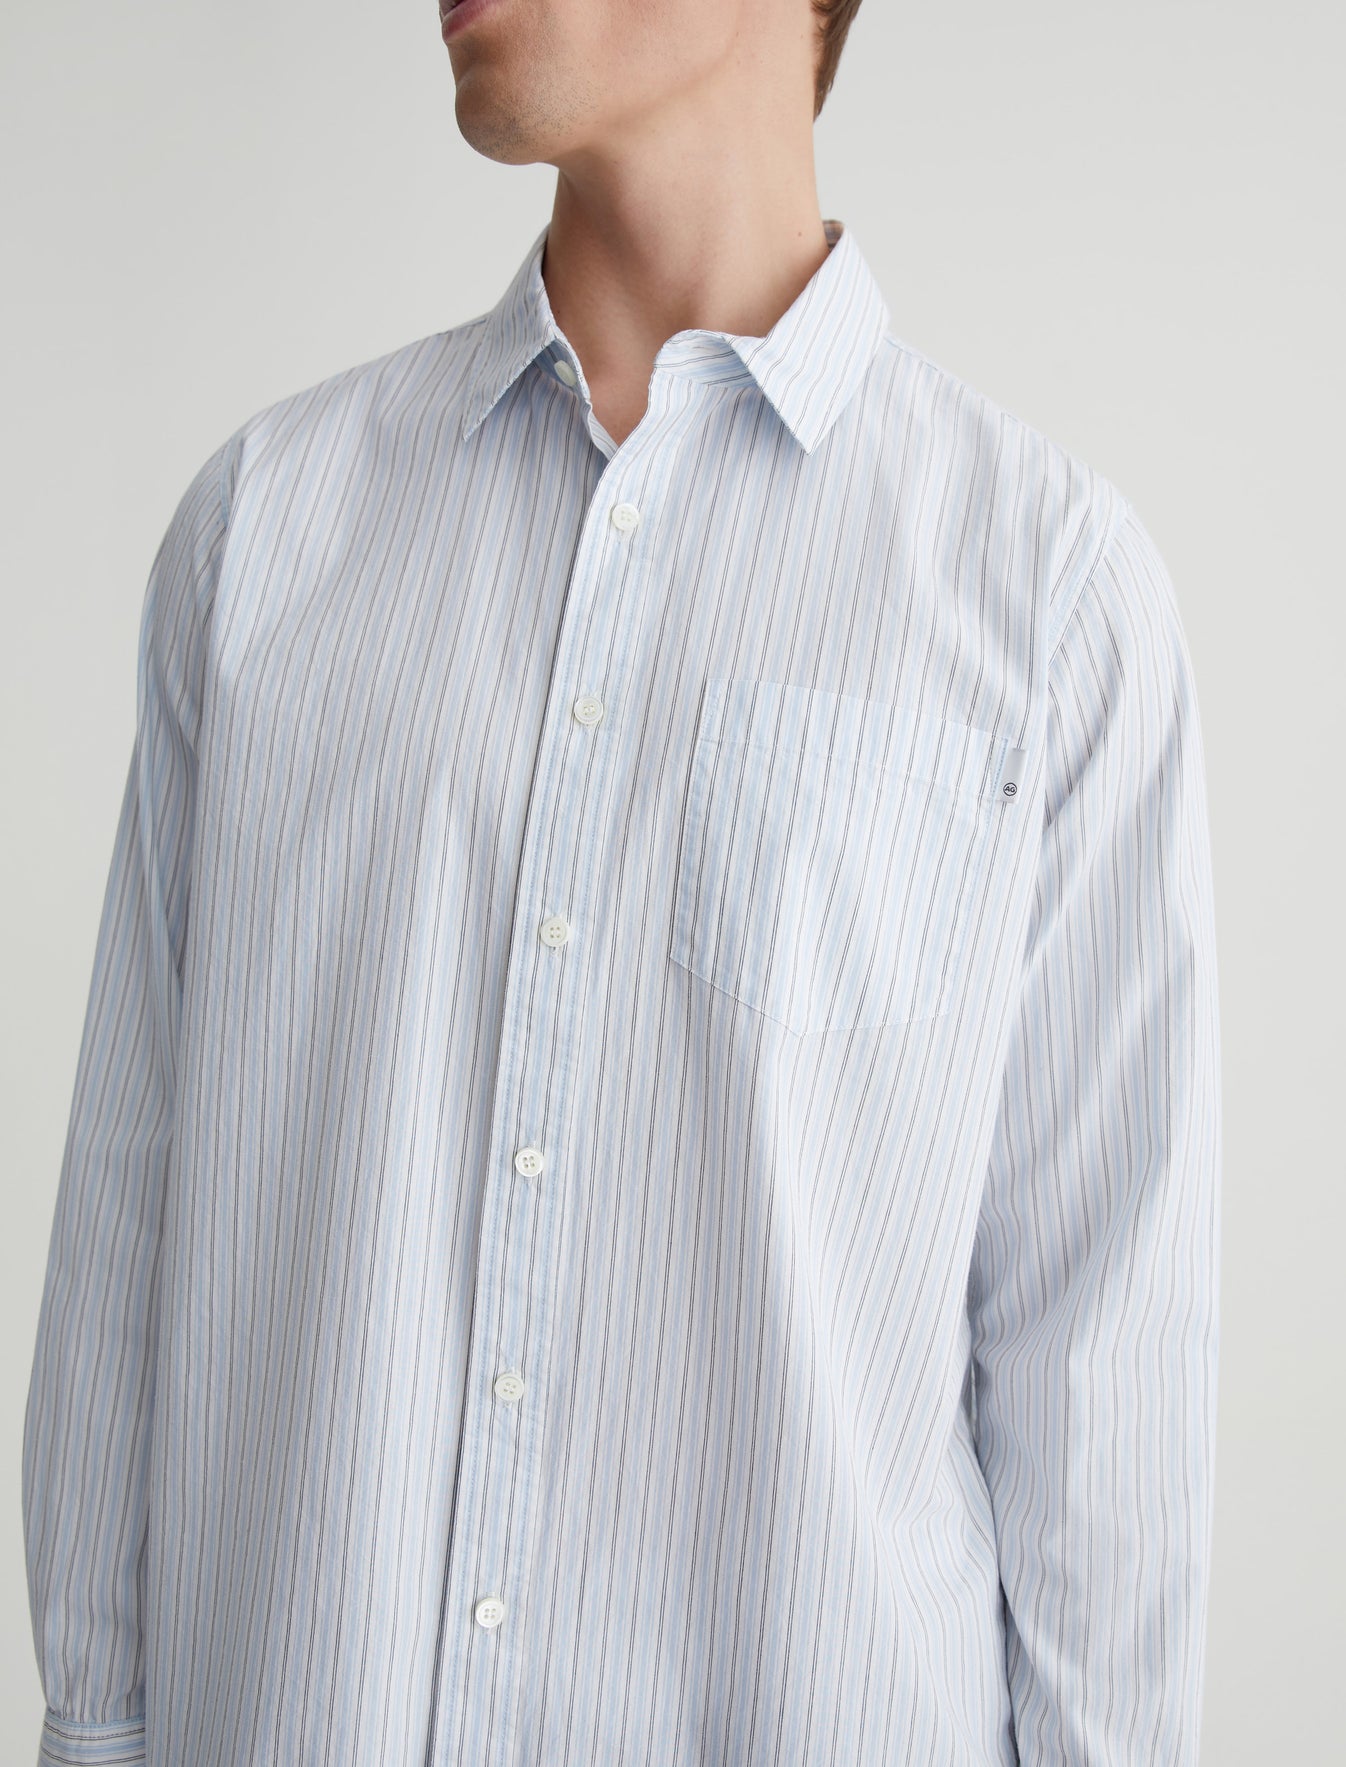 Aiden Shirt Gallery Stripe Blue Multi Classic Fit Long Sleeve Button-Up Shirt Men Top Photo 3